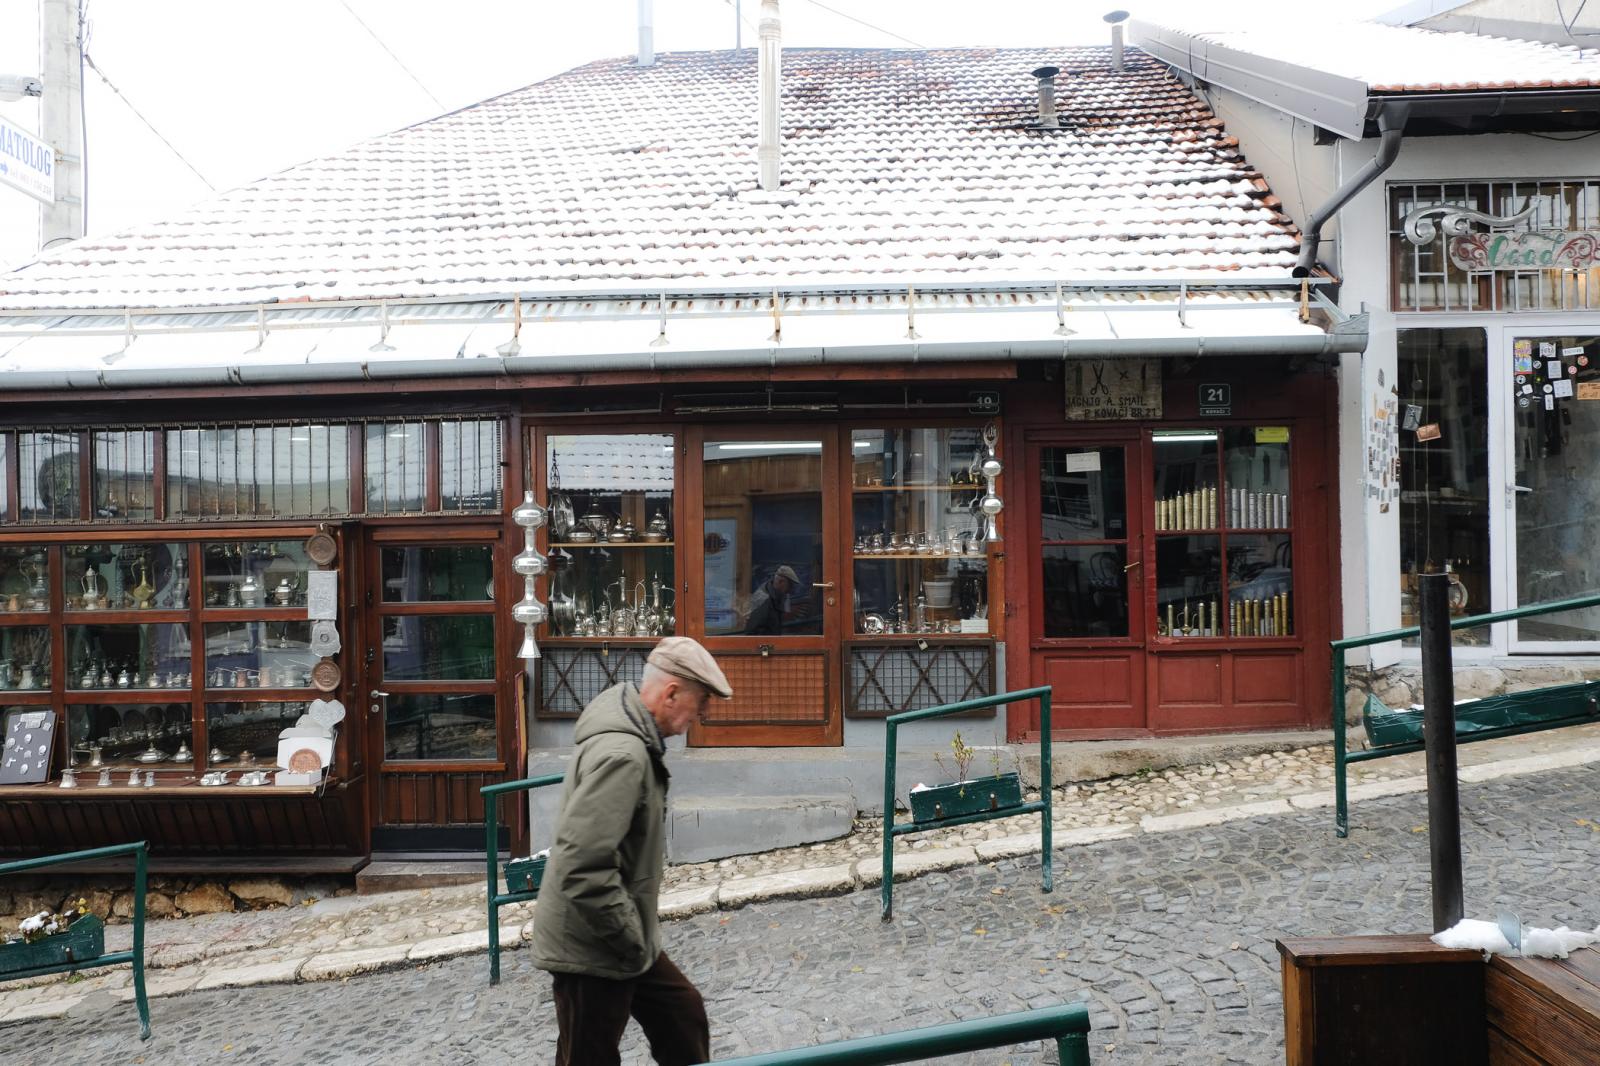 Sarajevo Coppersmithing for Co/Rizom